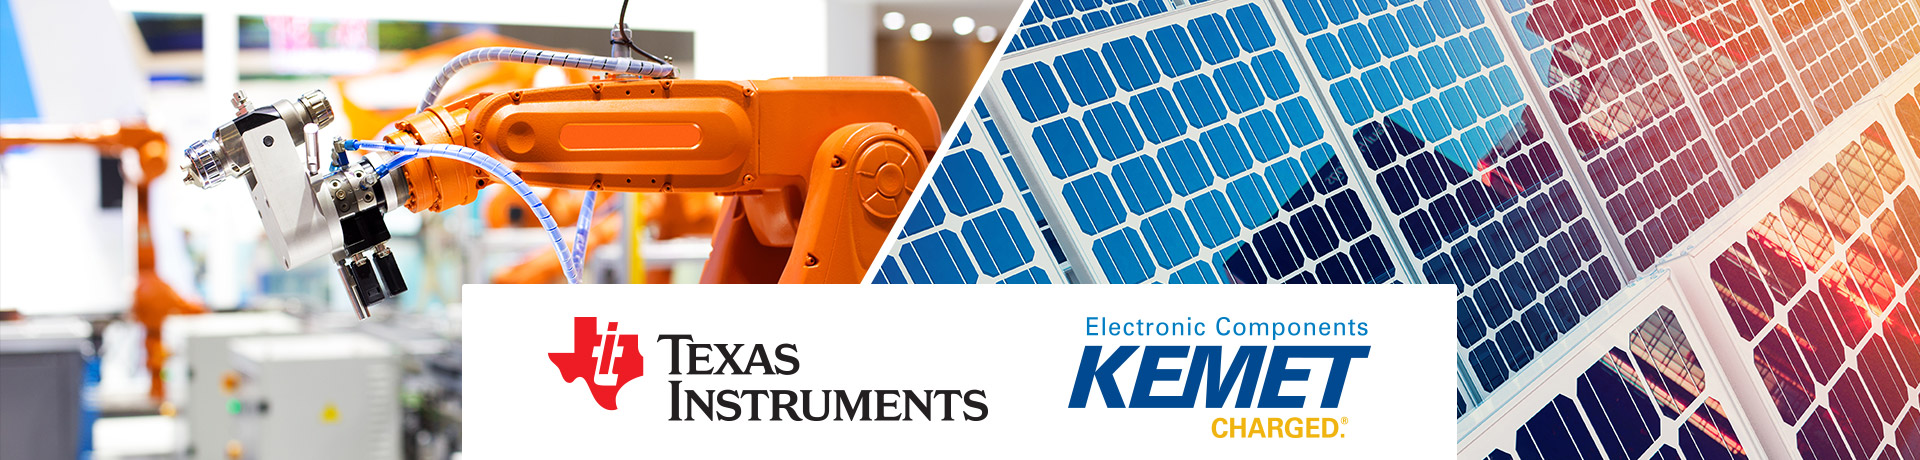 Texas Instruments and KEMET Electronics